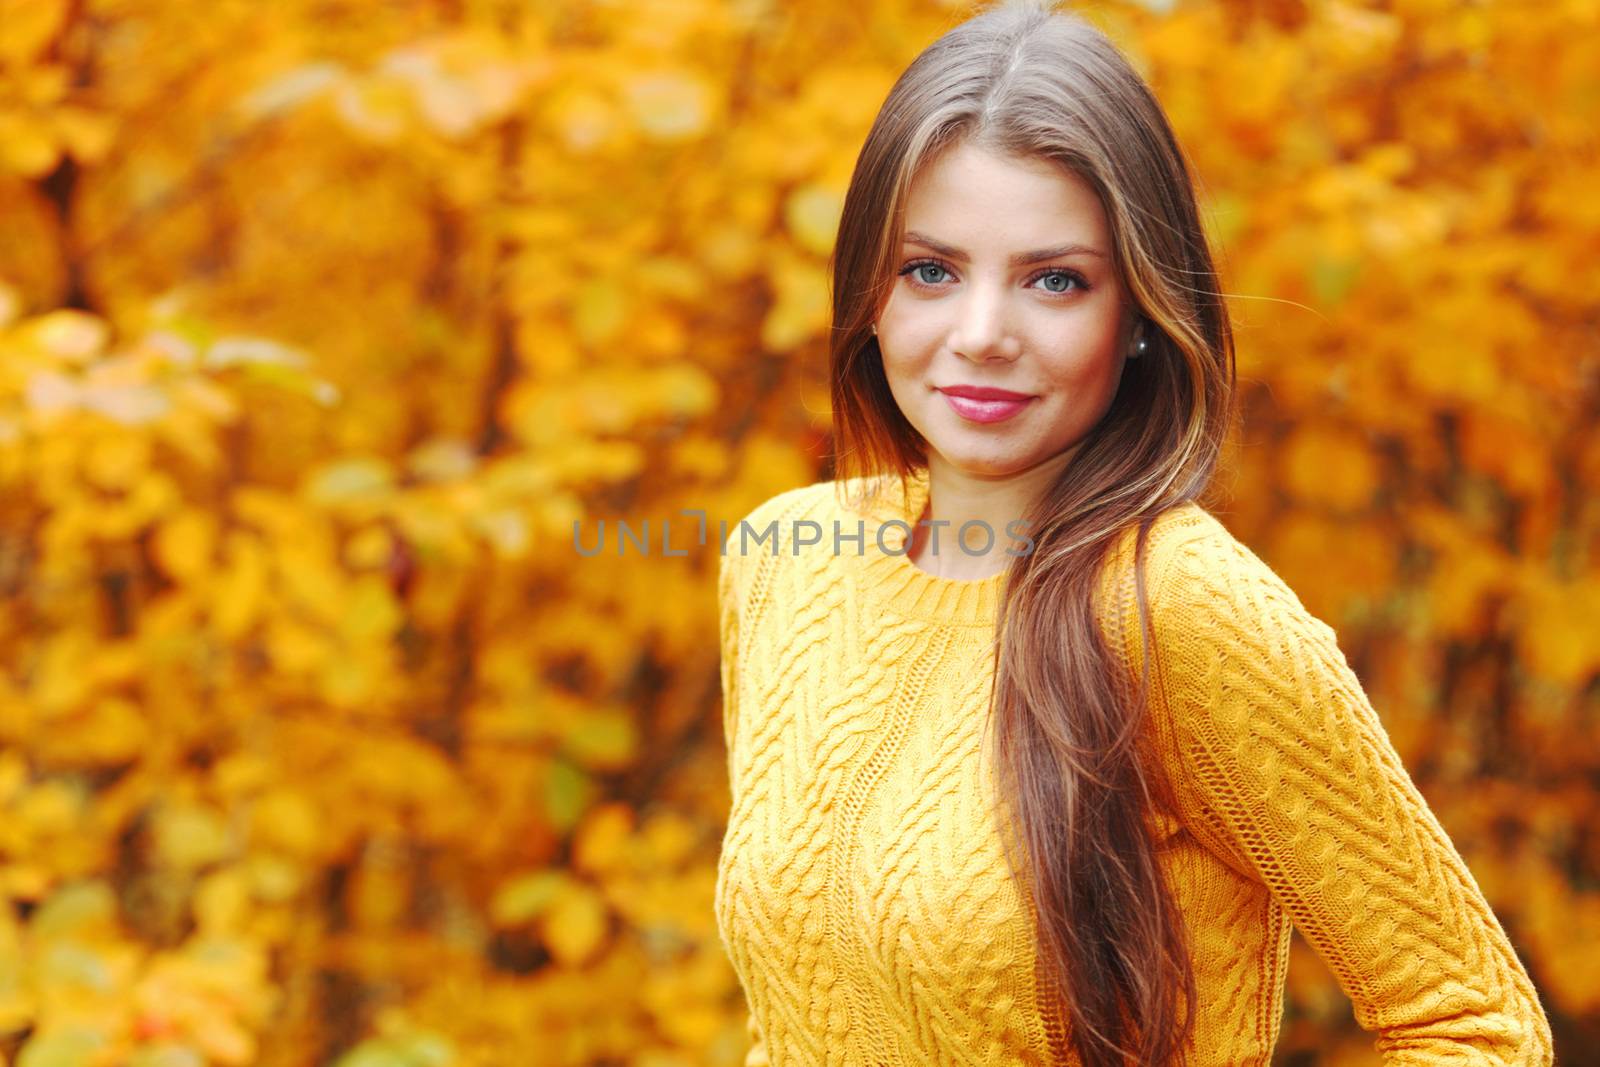 Autumn portrait of woman by Yellowj